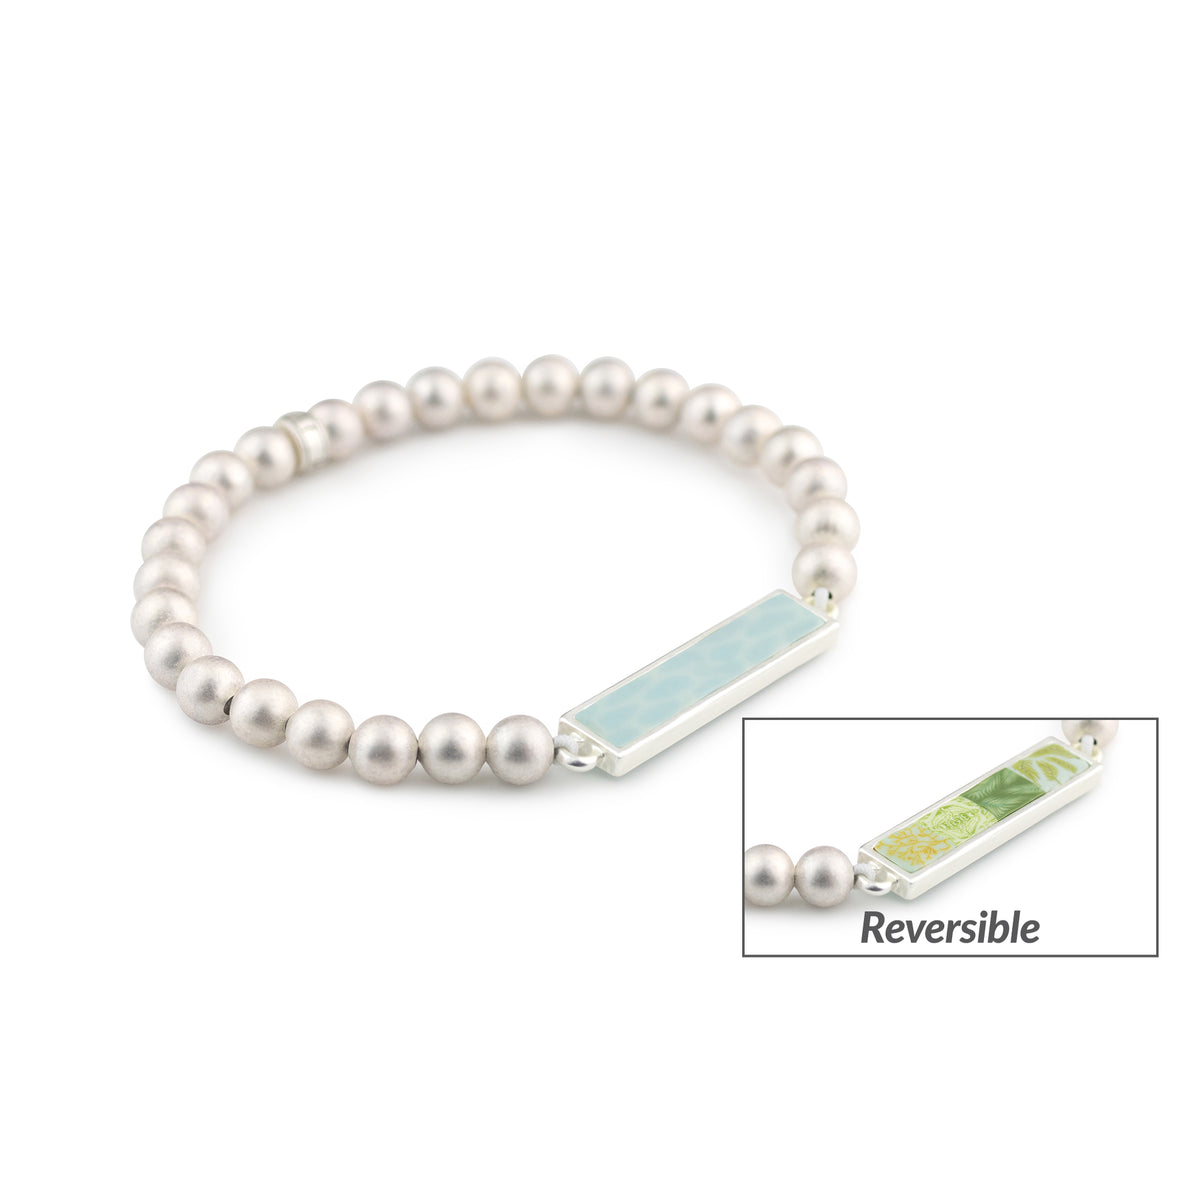 Bermuda Blue Reversible Bar Bracelet